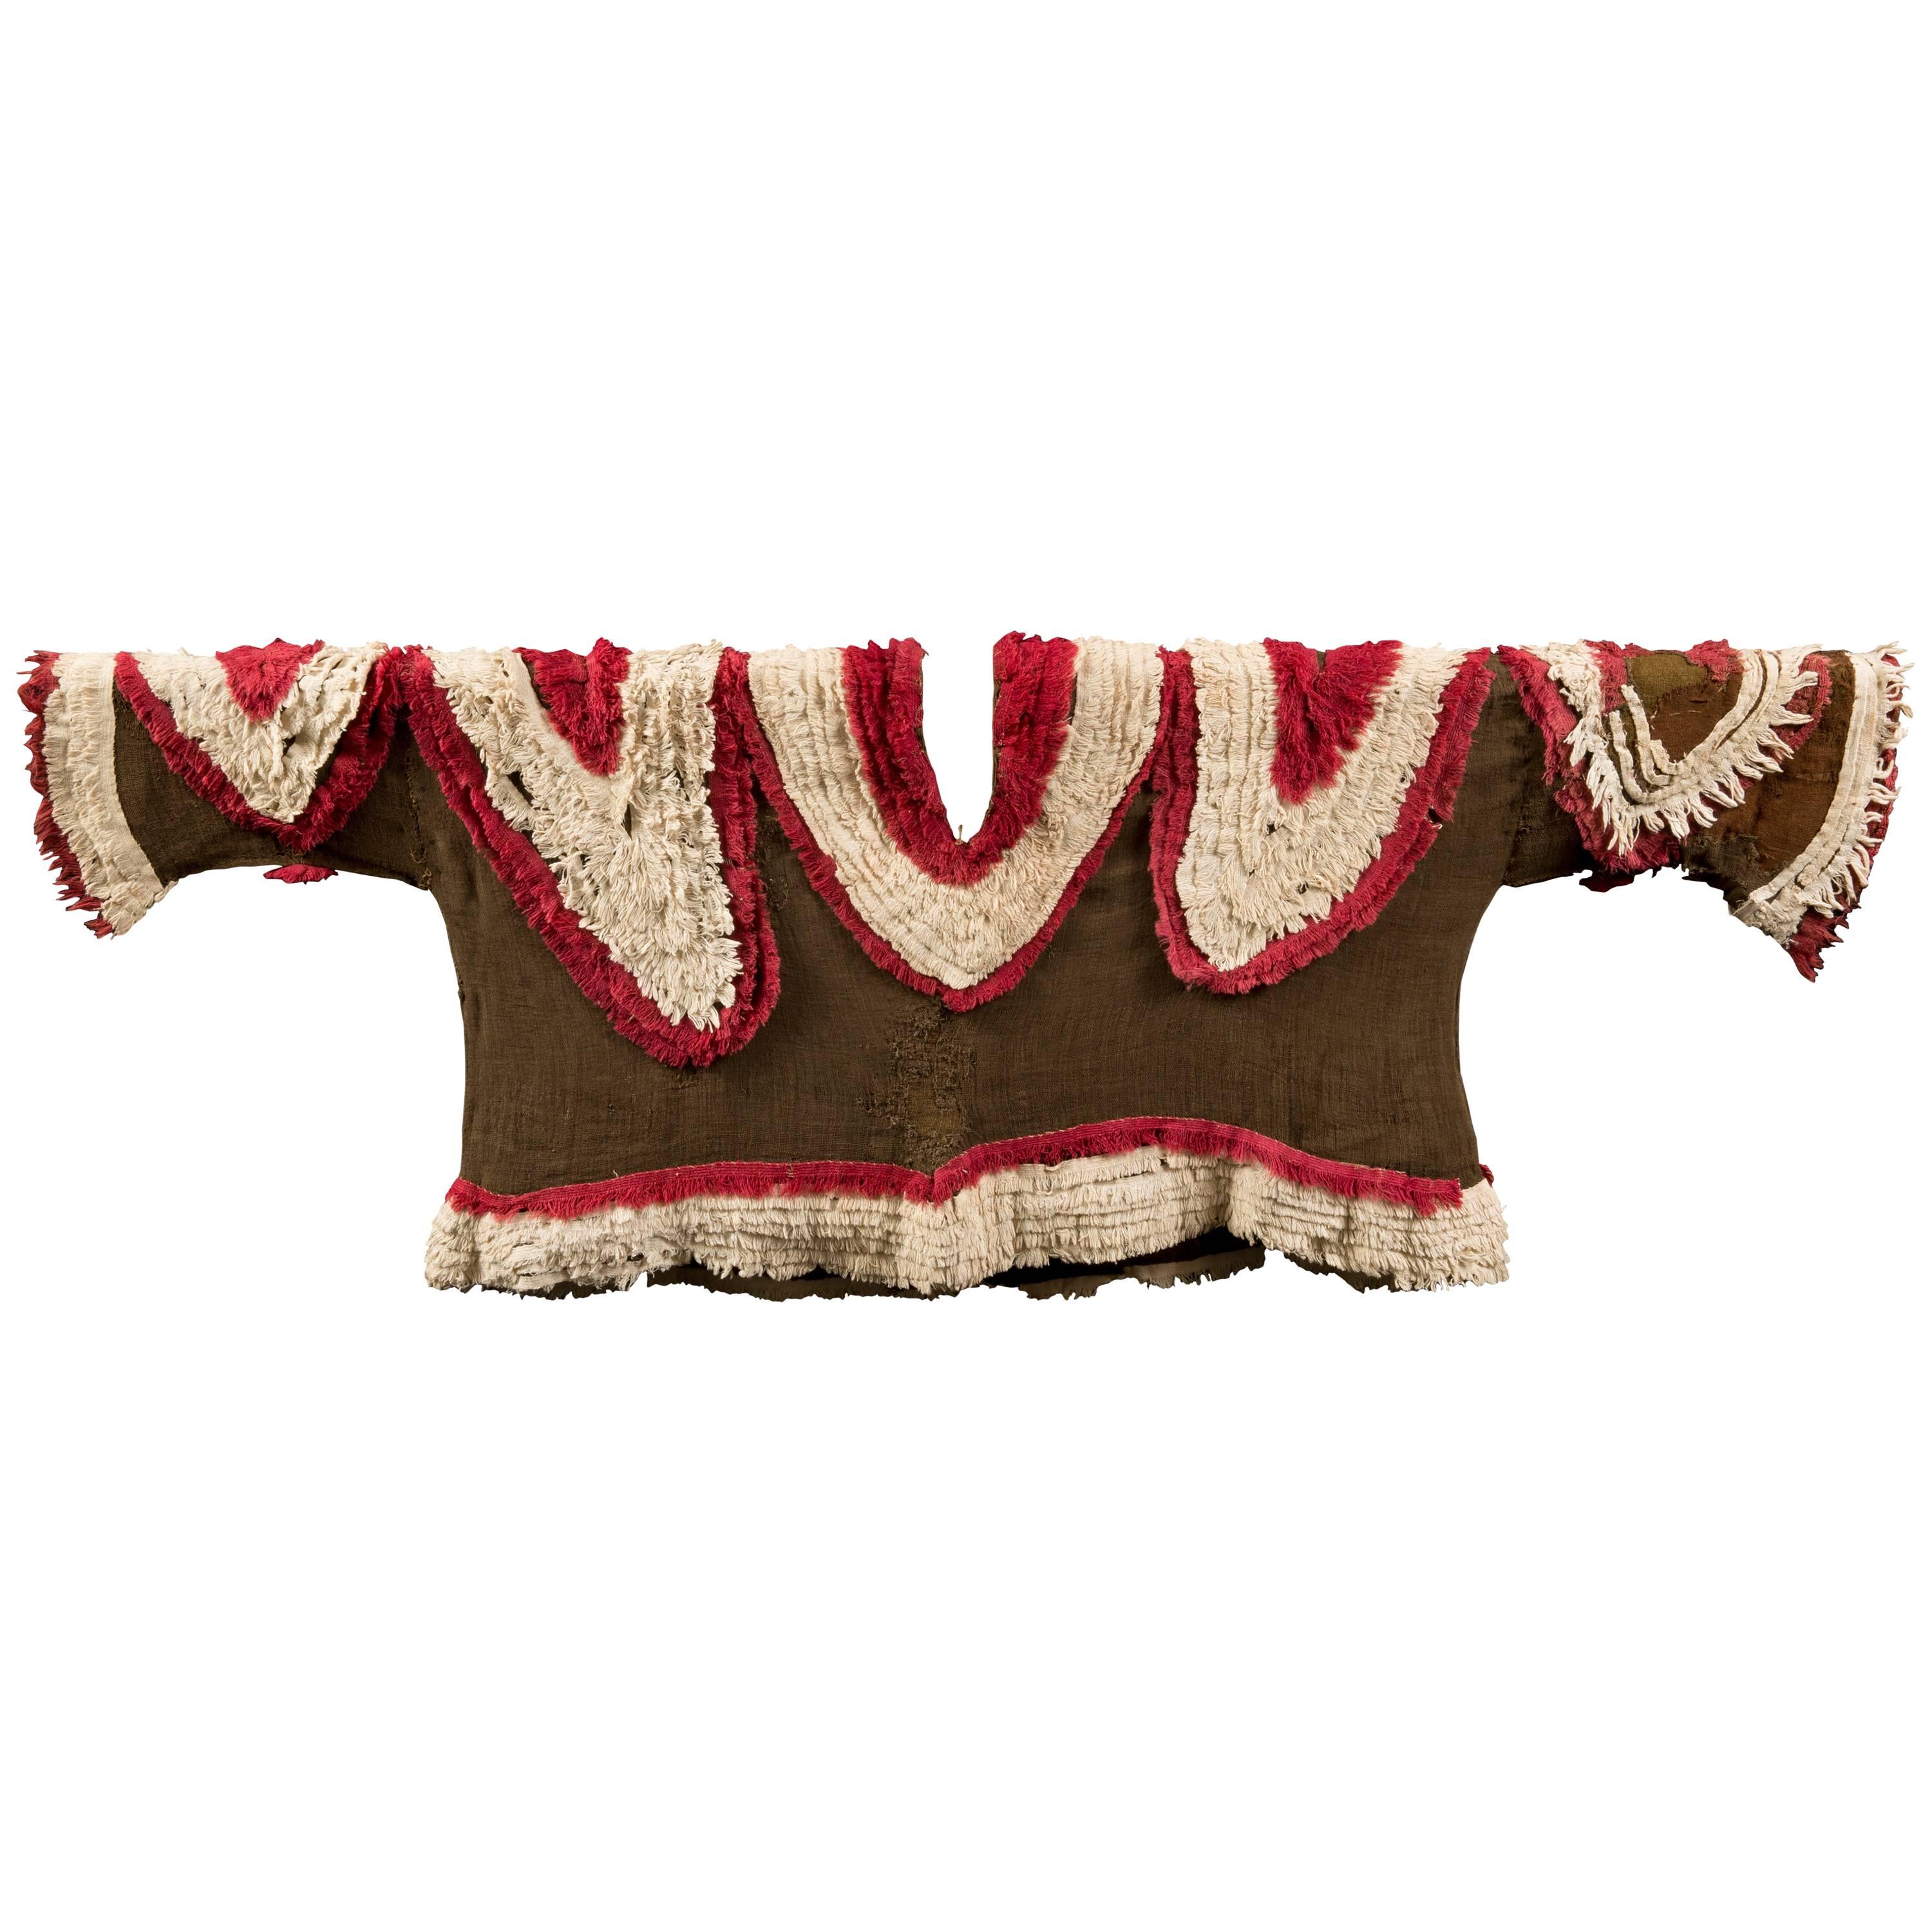 Extremely Rare Pre-Columbian Chimu Gauze Poncho Textile, Peru, 1000-1450 AD